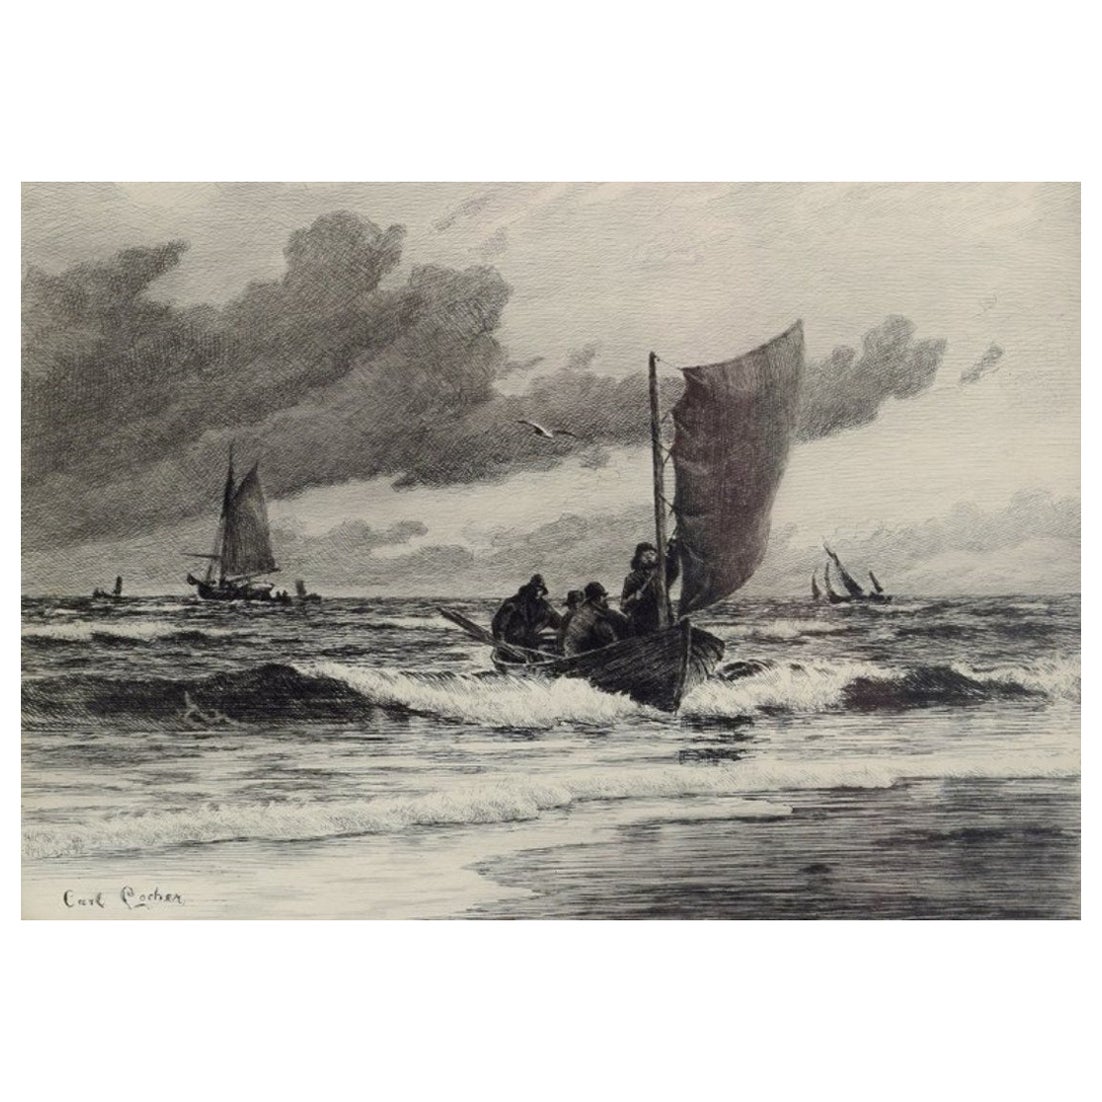 Carl Locher. The fishing boat arrives. Skagen. Etching on paper. 1899. 